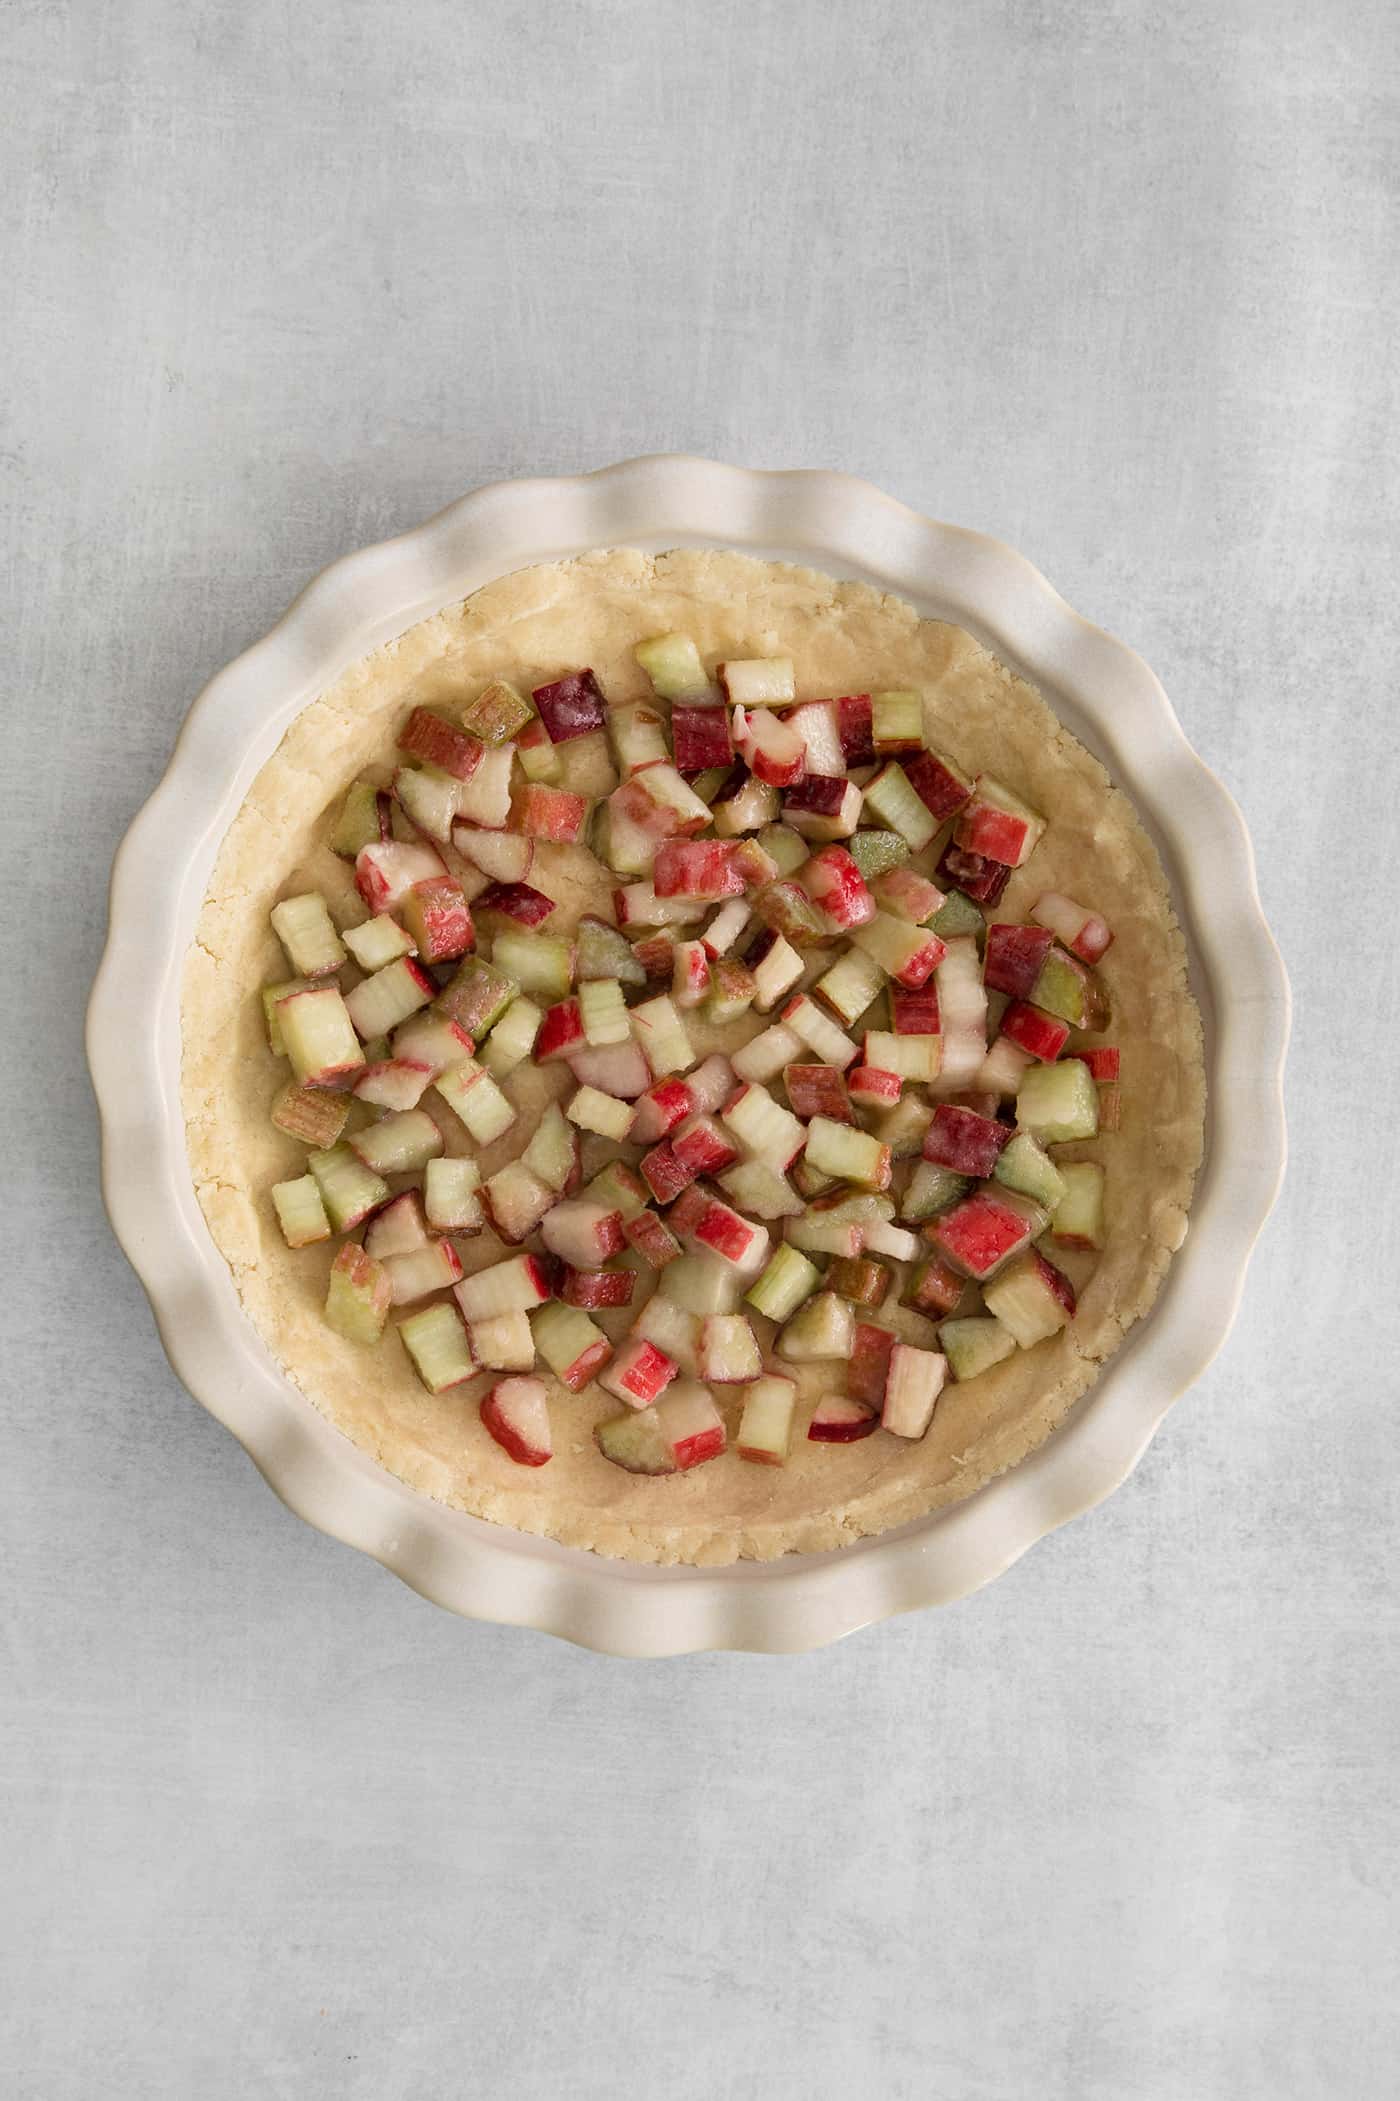 rhubarb spread across the pie crust in a pie plate